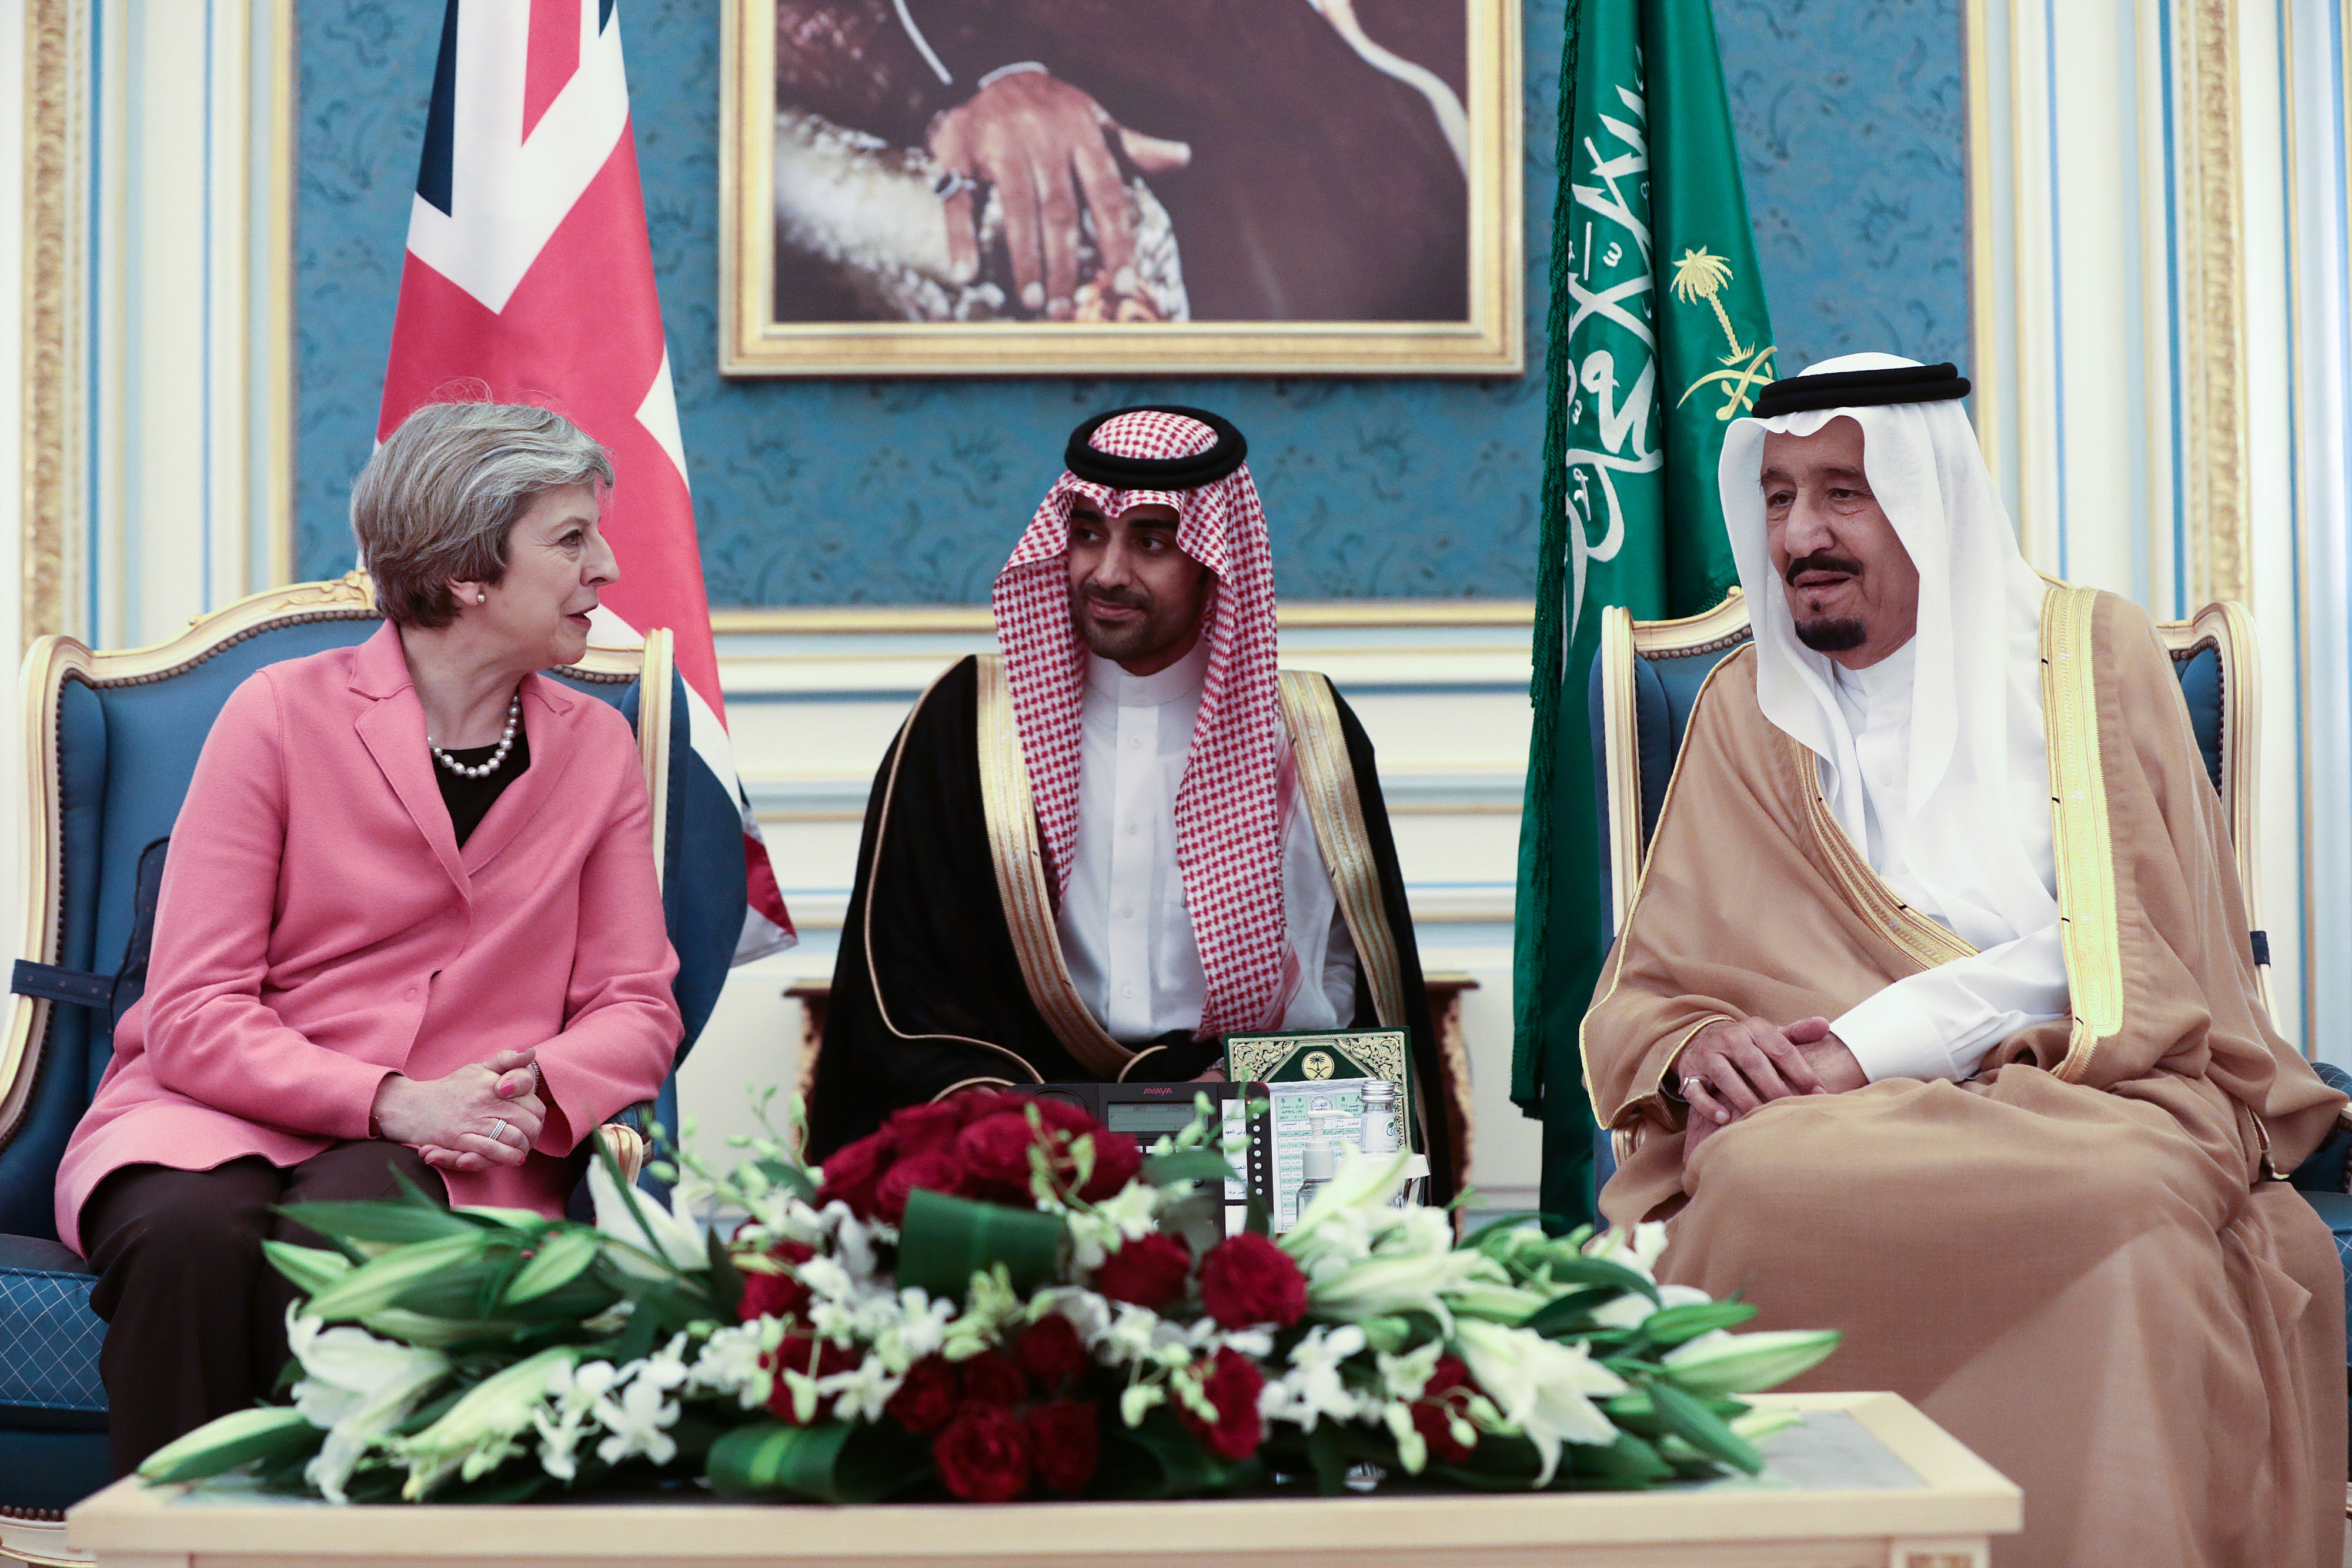 Theresa May, UK prime minister, left, speaks with King Salman bin Abdulaziz, Saudi Arabia's king, right, during their meeting at Al-Yamamah Palace in Riyadh, Saudi Arabia, on April 5, 2017